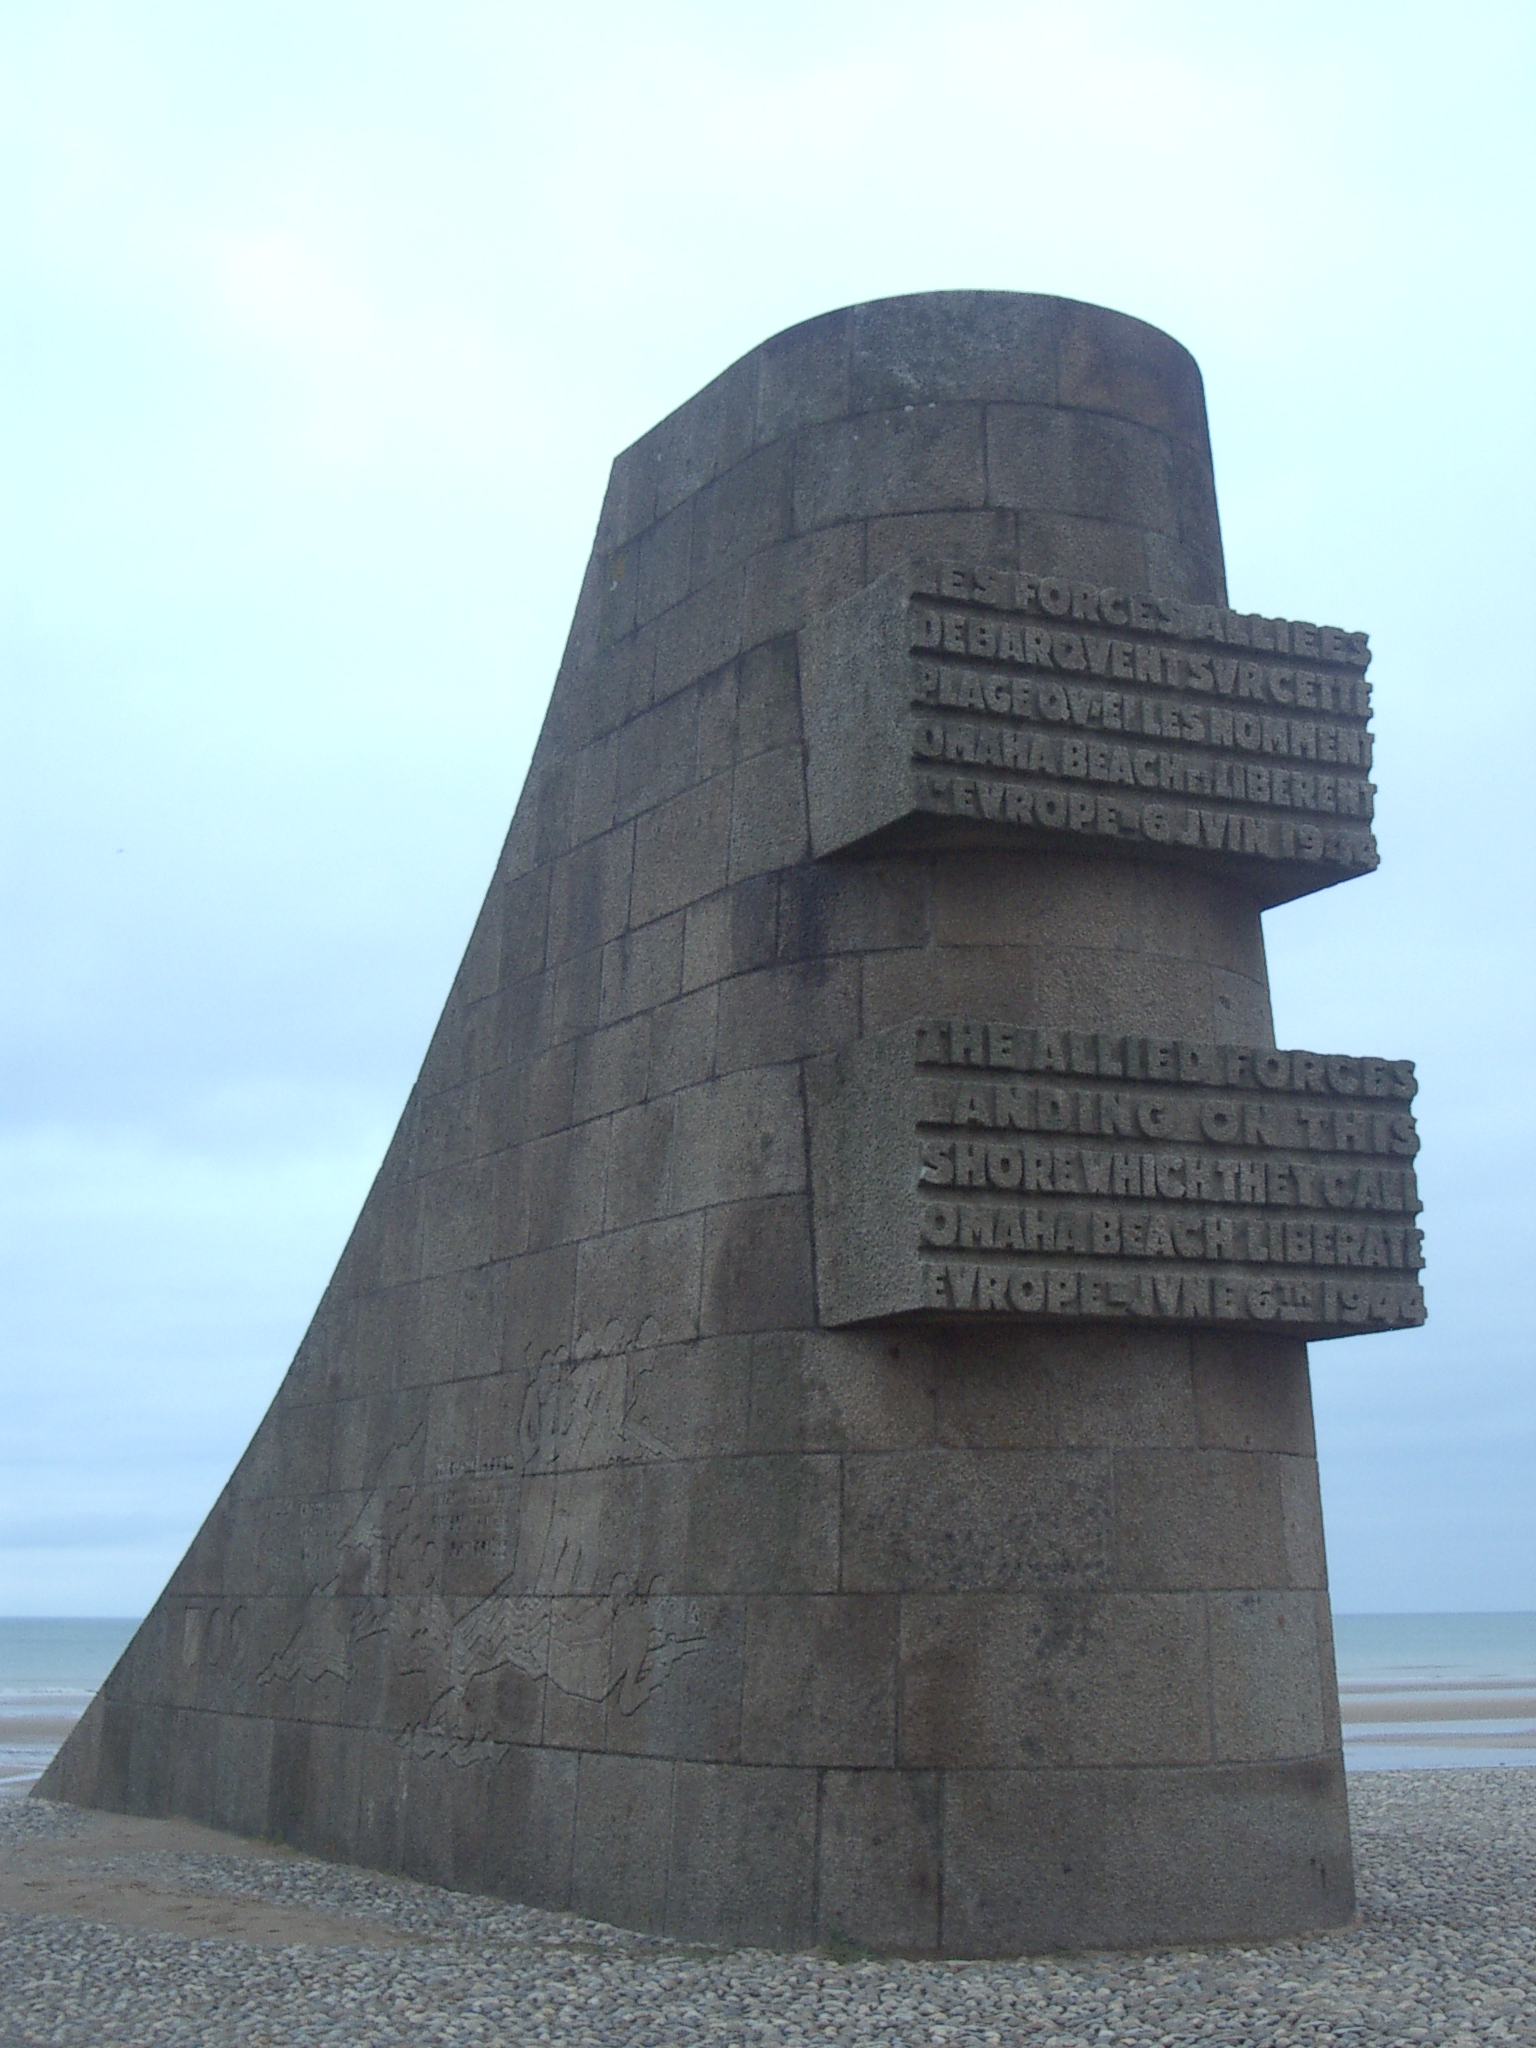 Omaha Beach memorial 2